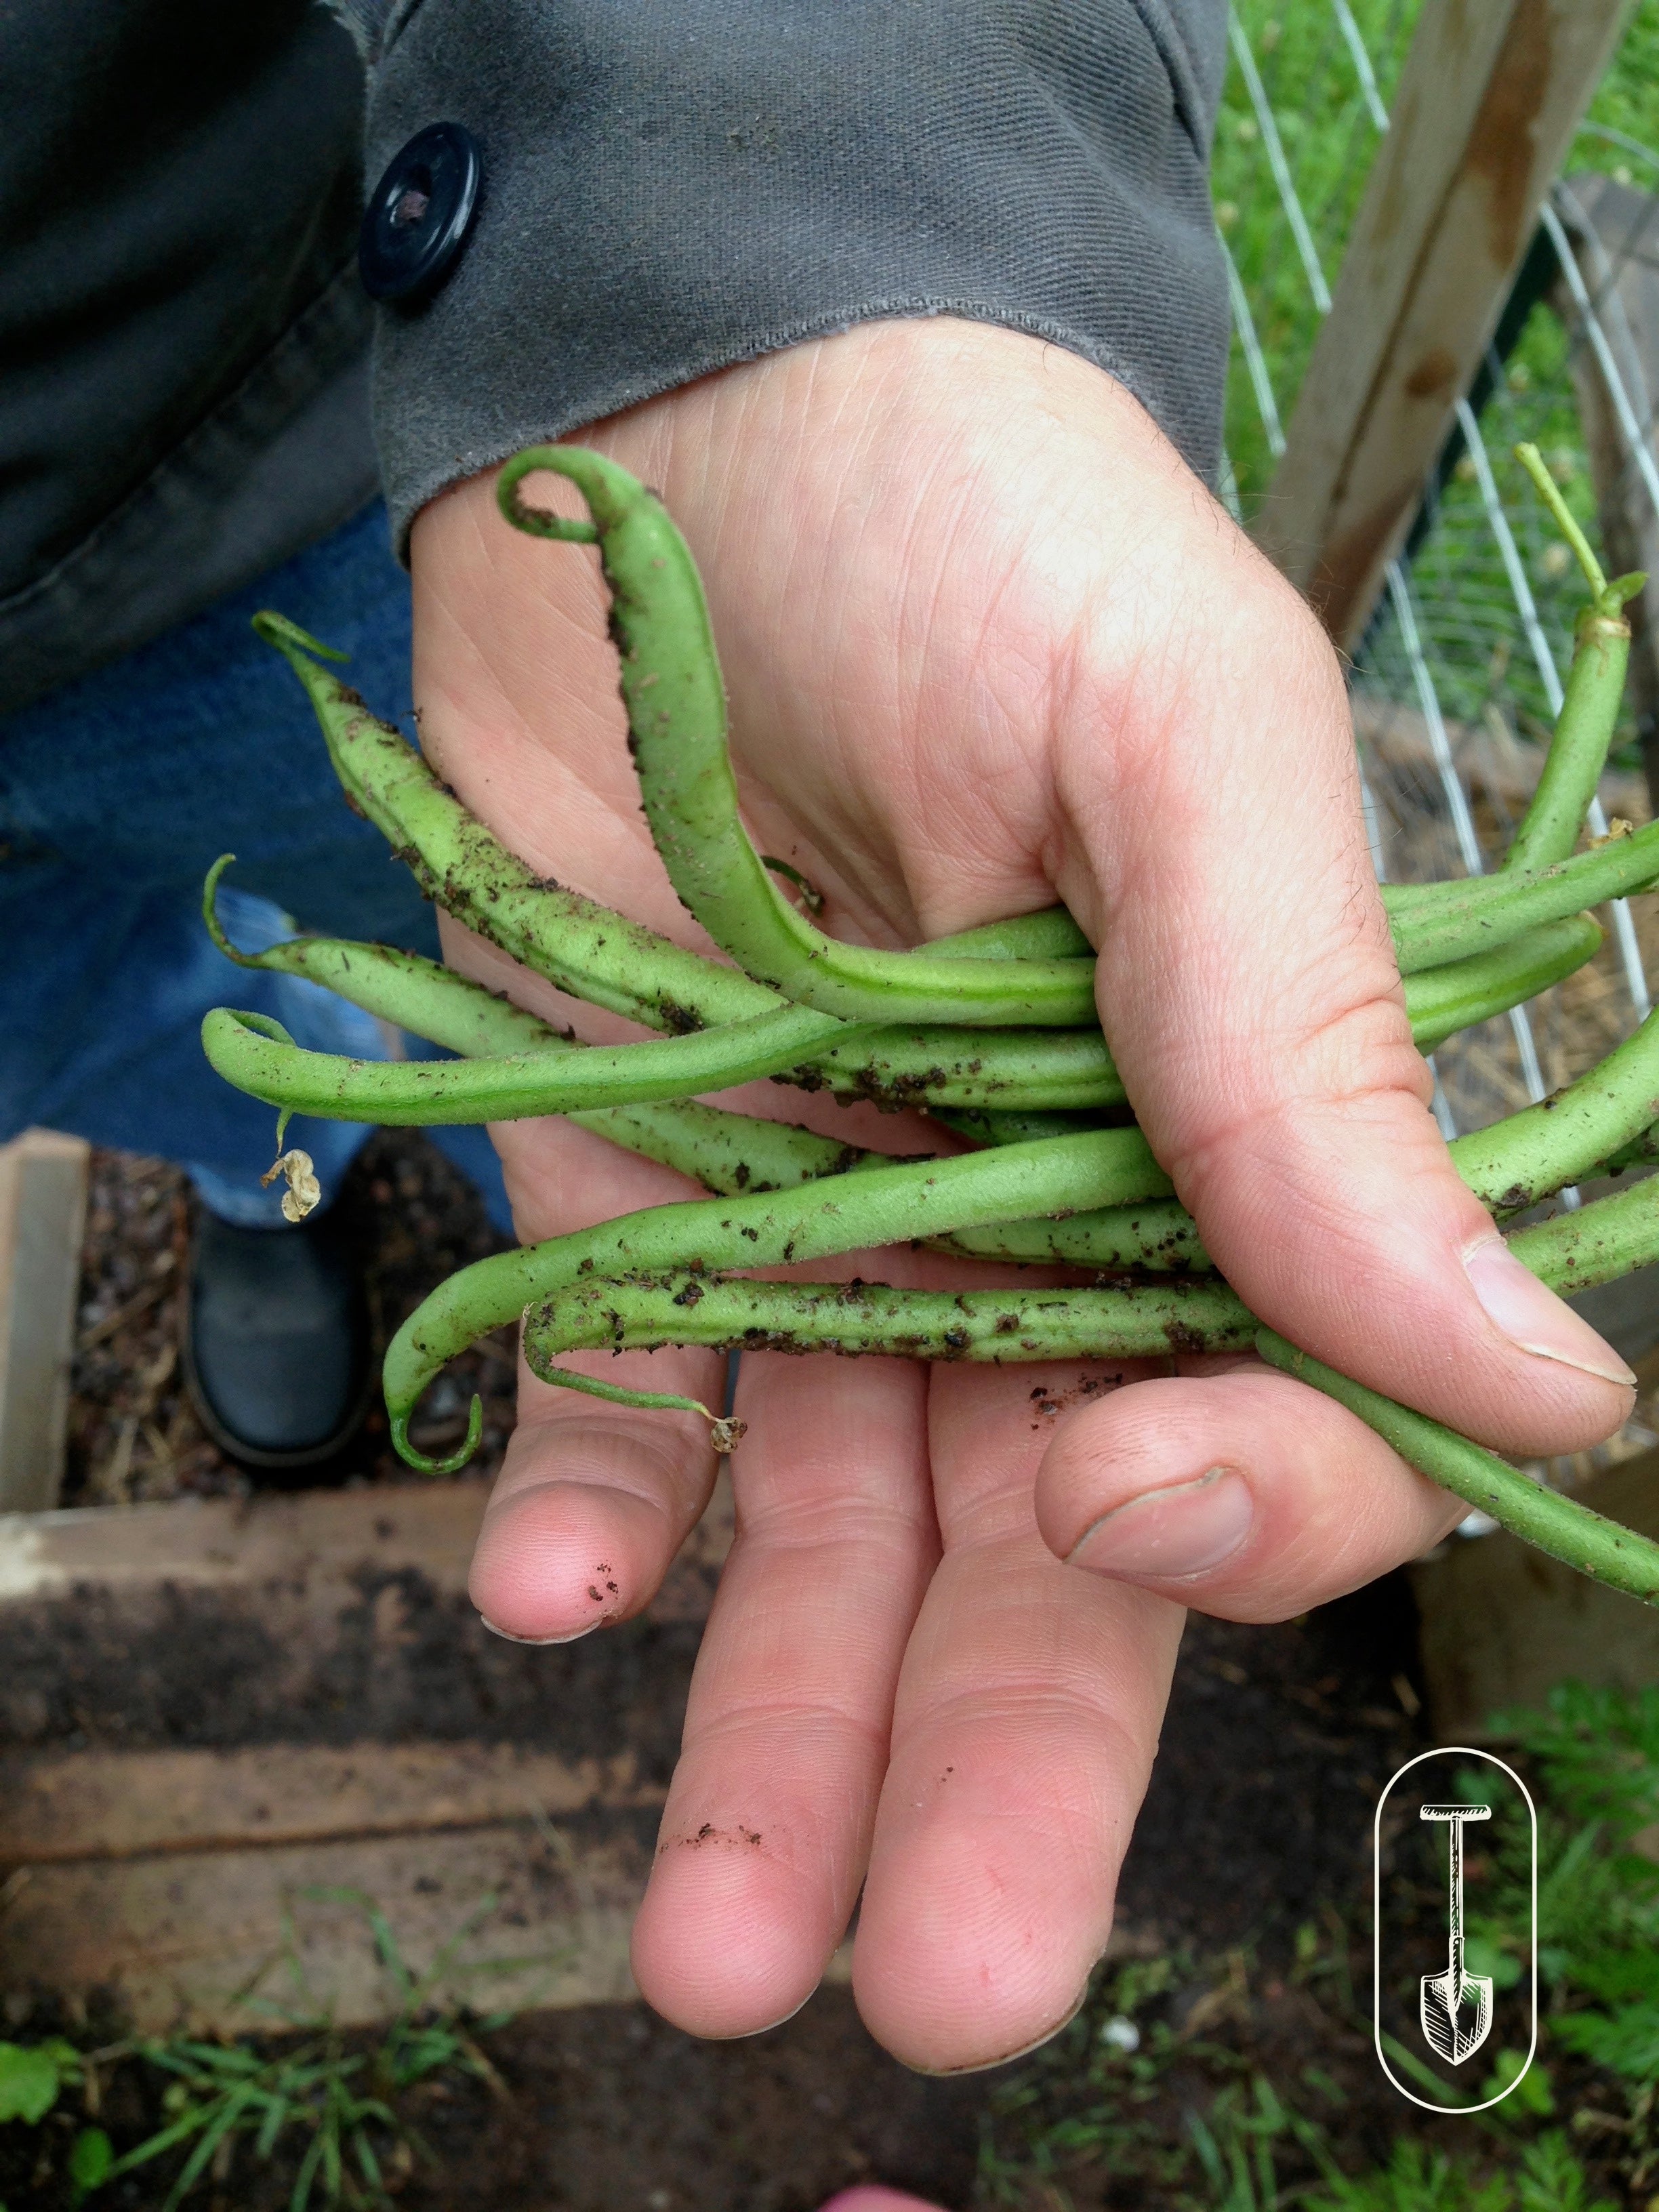 Man's hand holding green beans